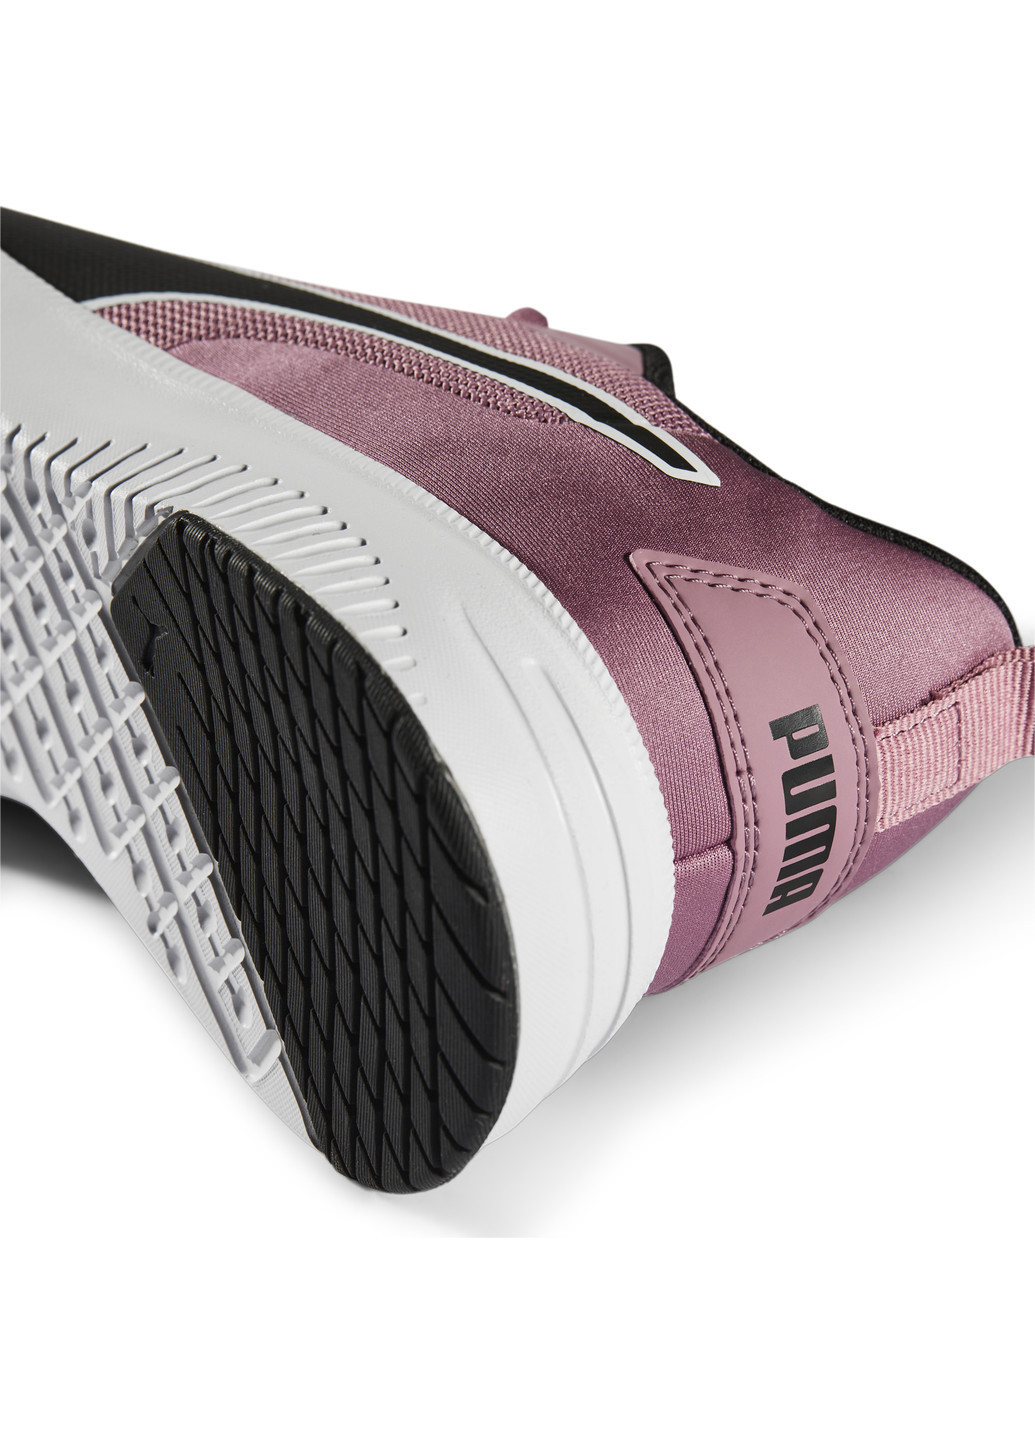 Фіолетові всесезонні кросівки flyer flex running shoes Puma